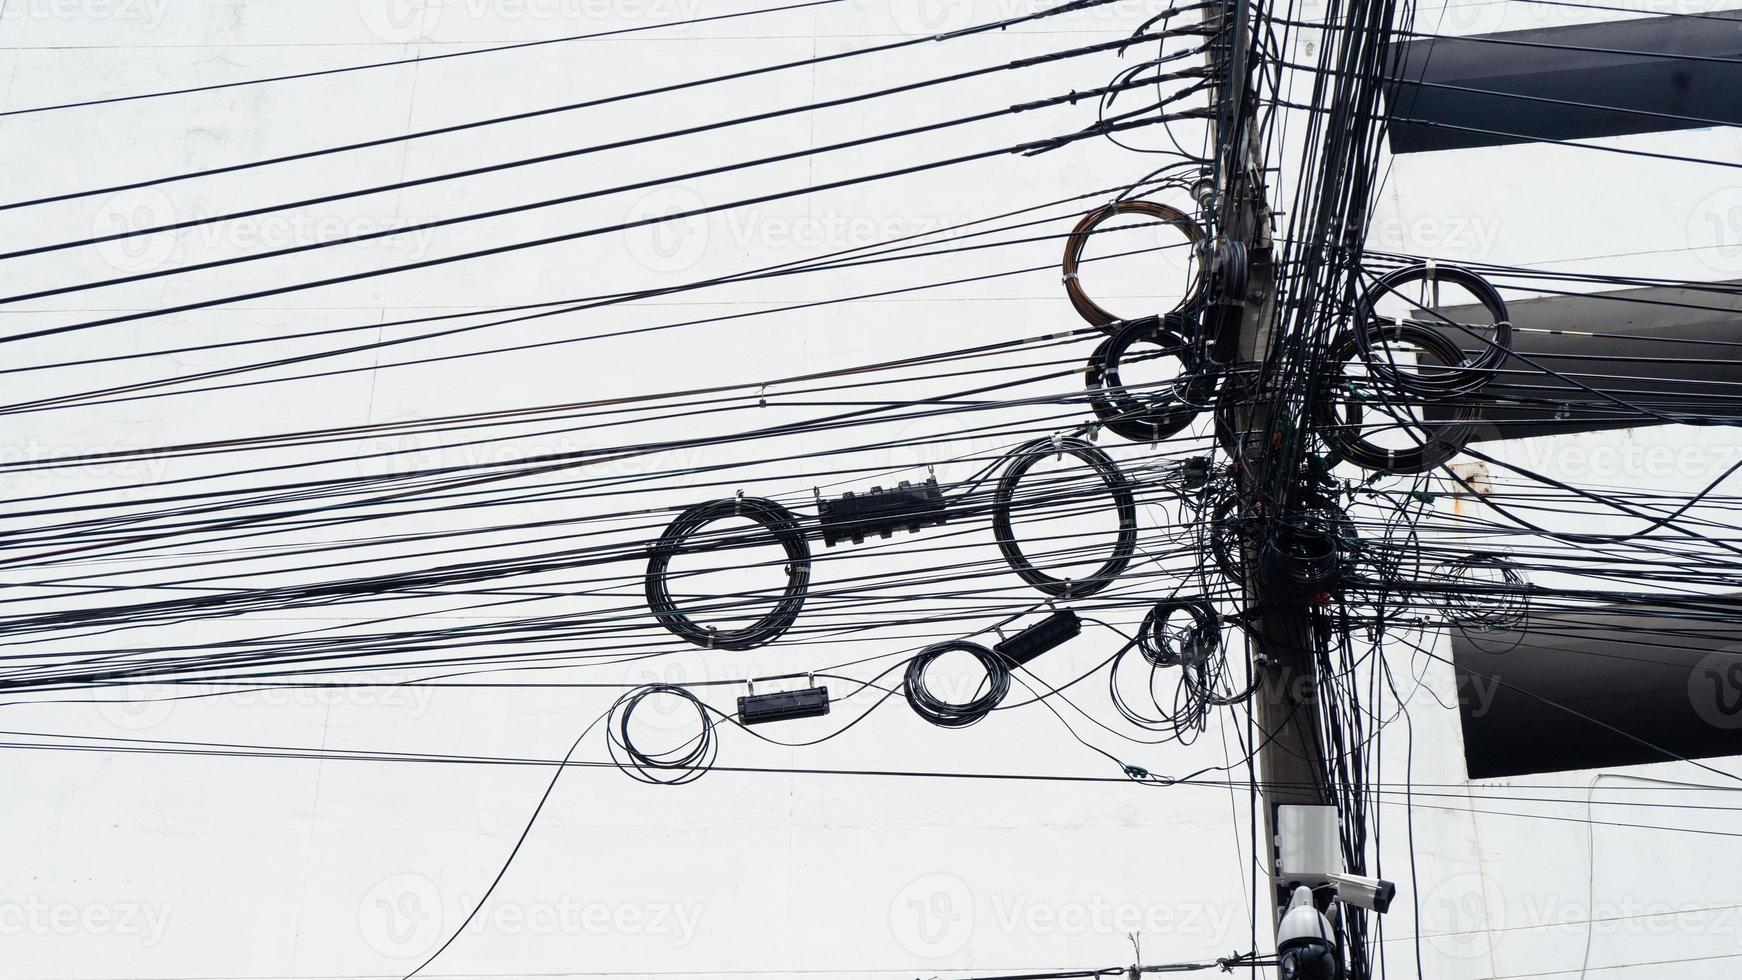 signal linje kablar tilltrasslad på Pol av kaotisk linje på elektrisk Pol på gående gata, trassligt elektrisk tråd på thai gata foto